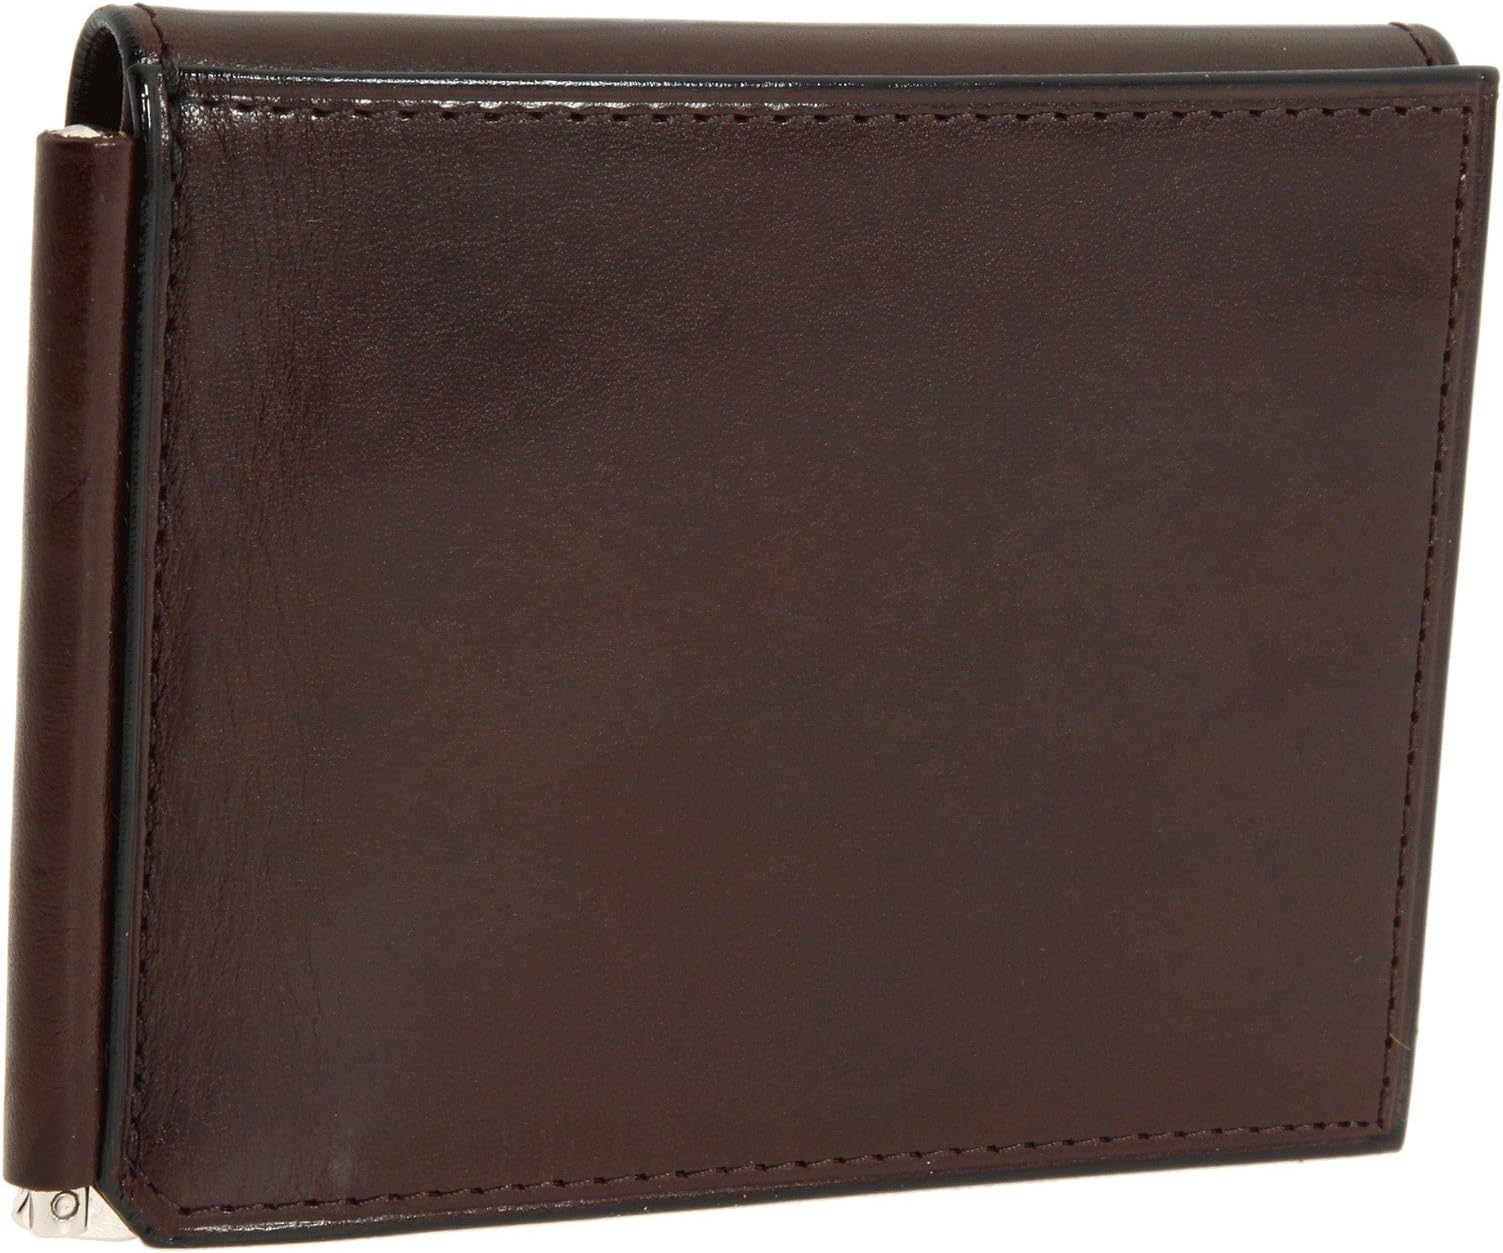 Кошелек Old Leather Collection - Money Clip w/ Pocket Bosca, цвет Dark Brown Leather